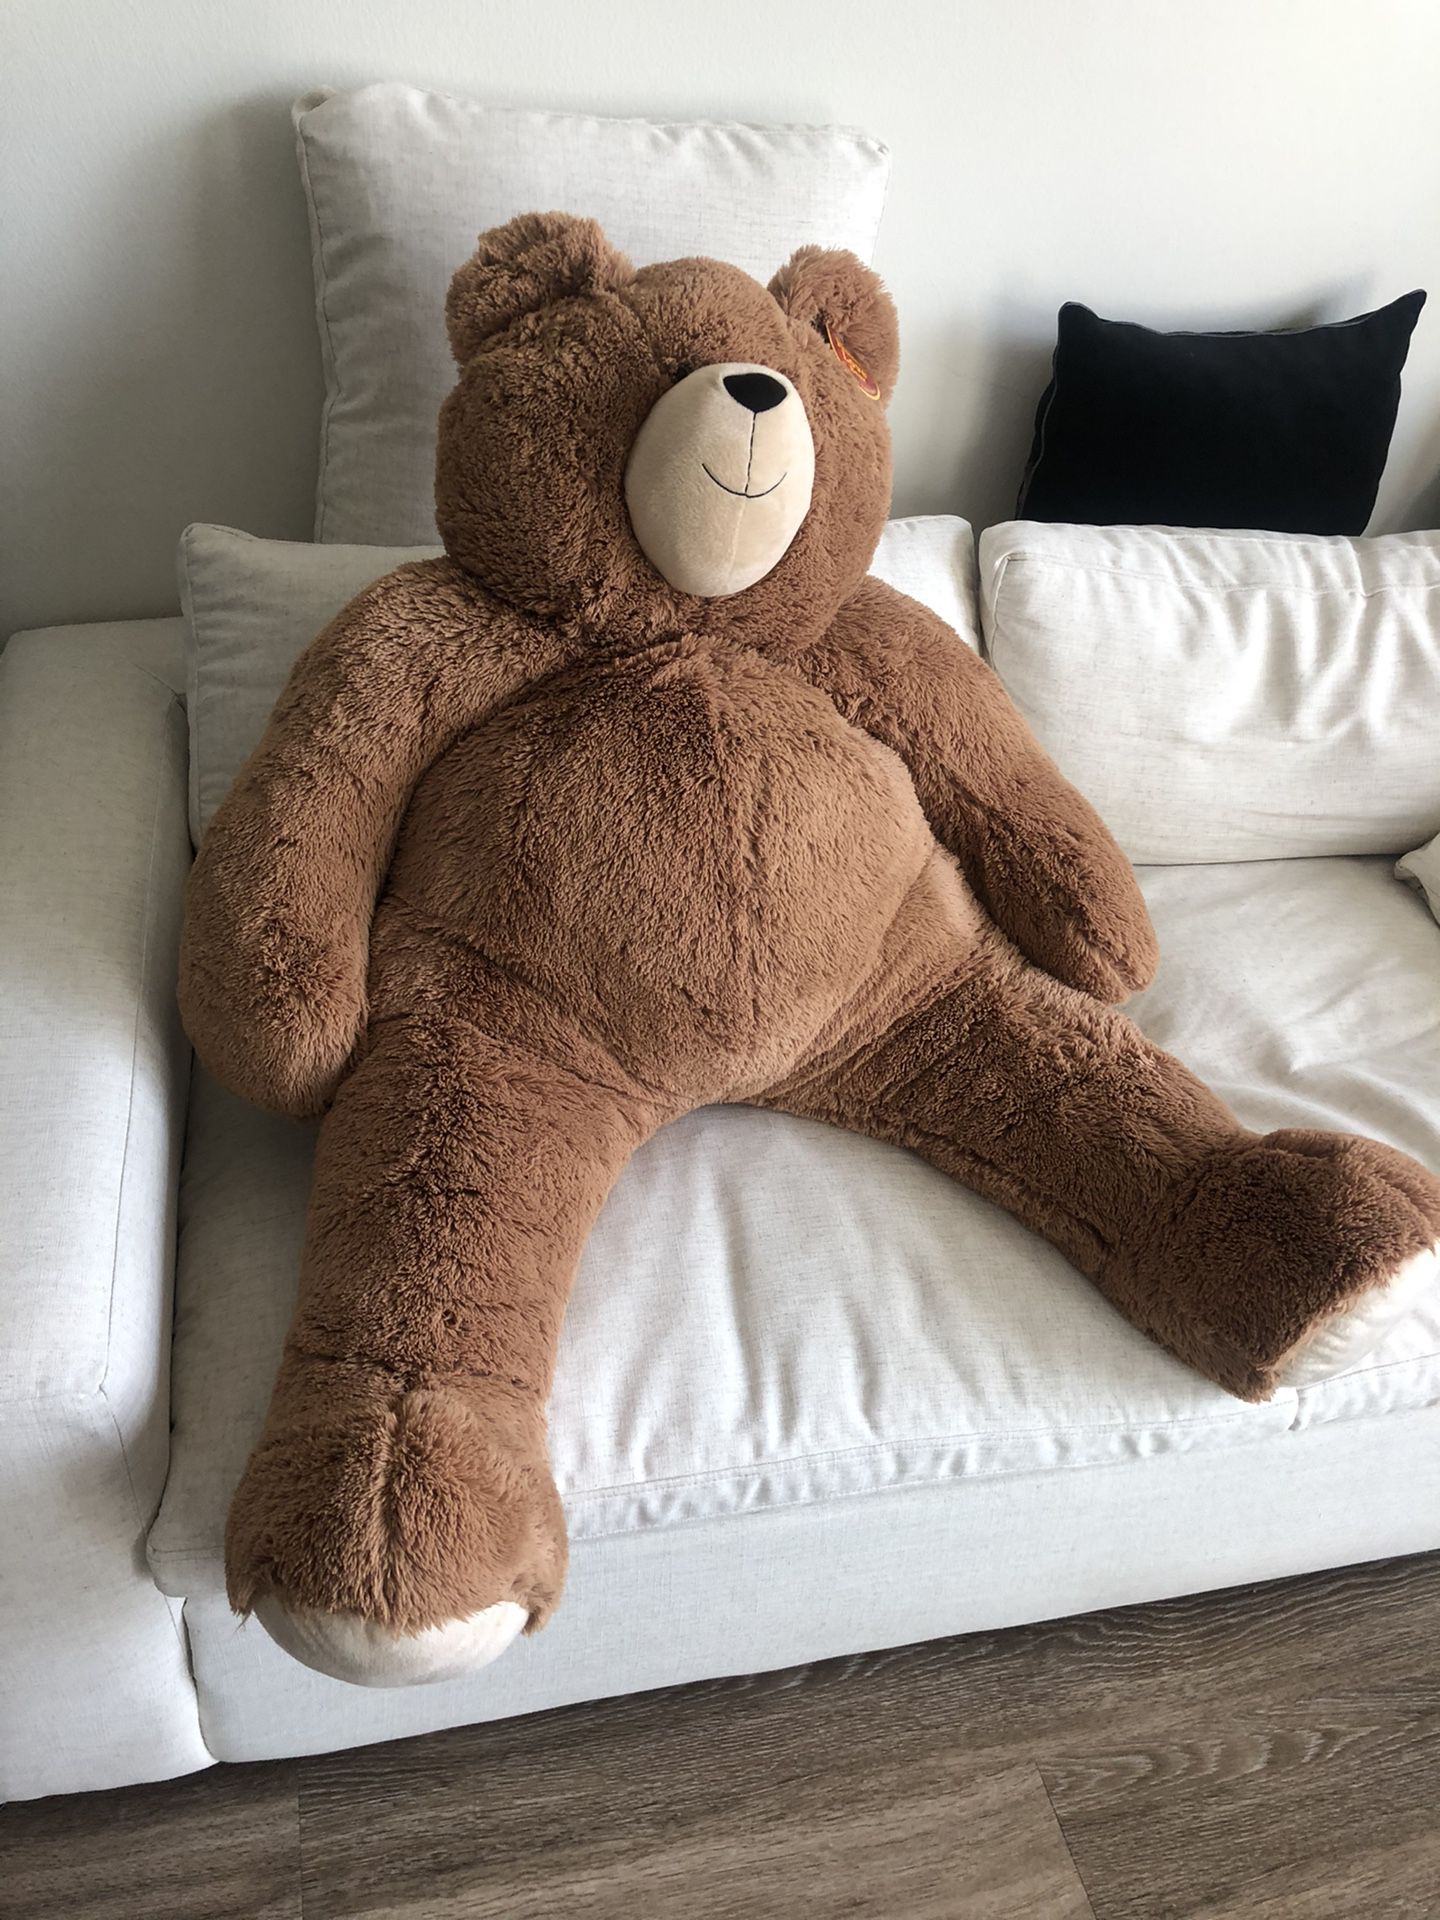 Huge Teddy Bear - new with tags